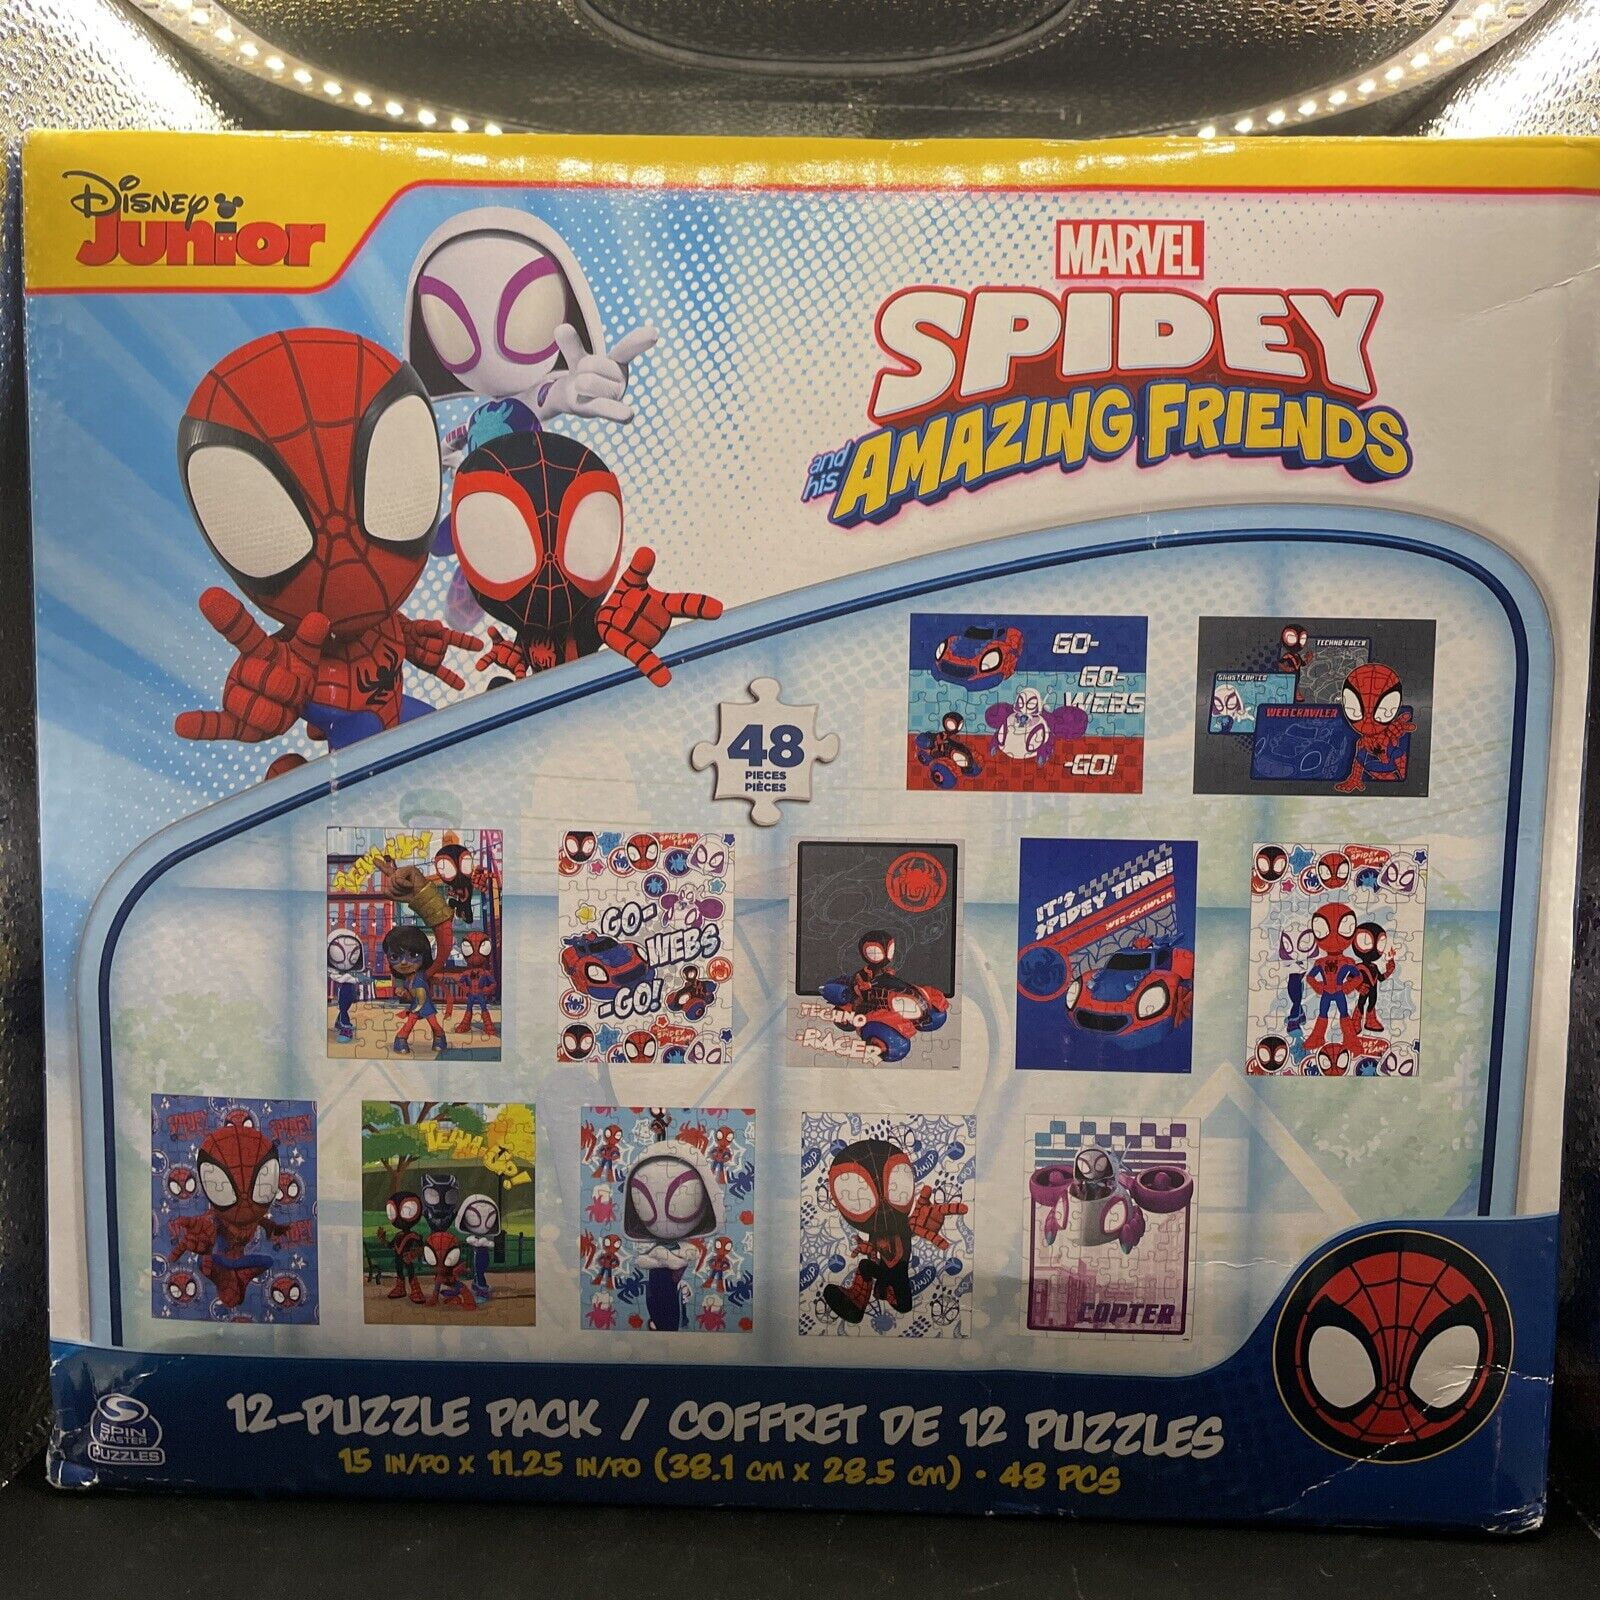 Spidey & Friends 3-Pack Puzzle Set